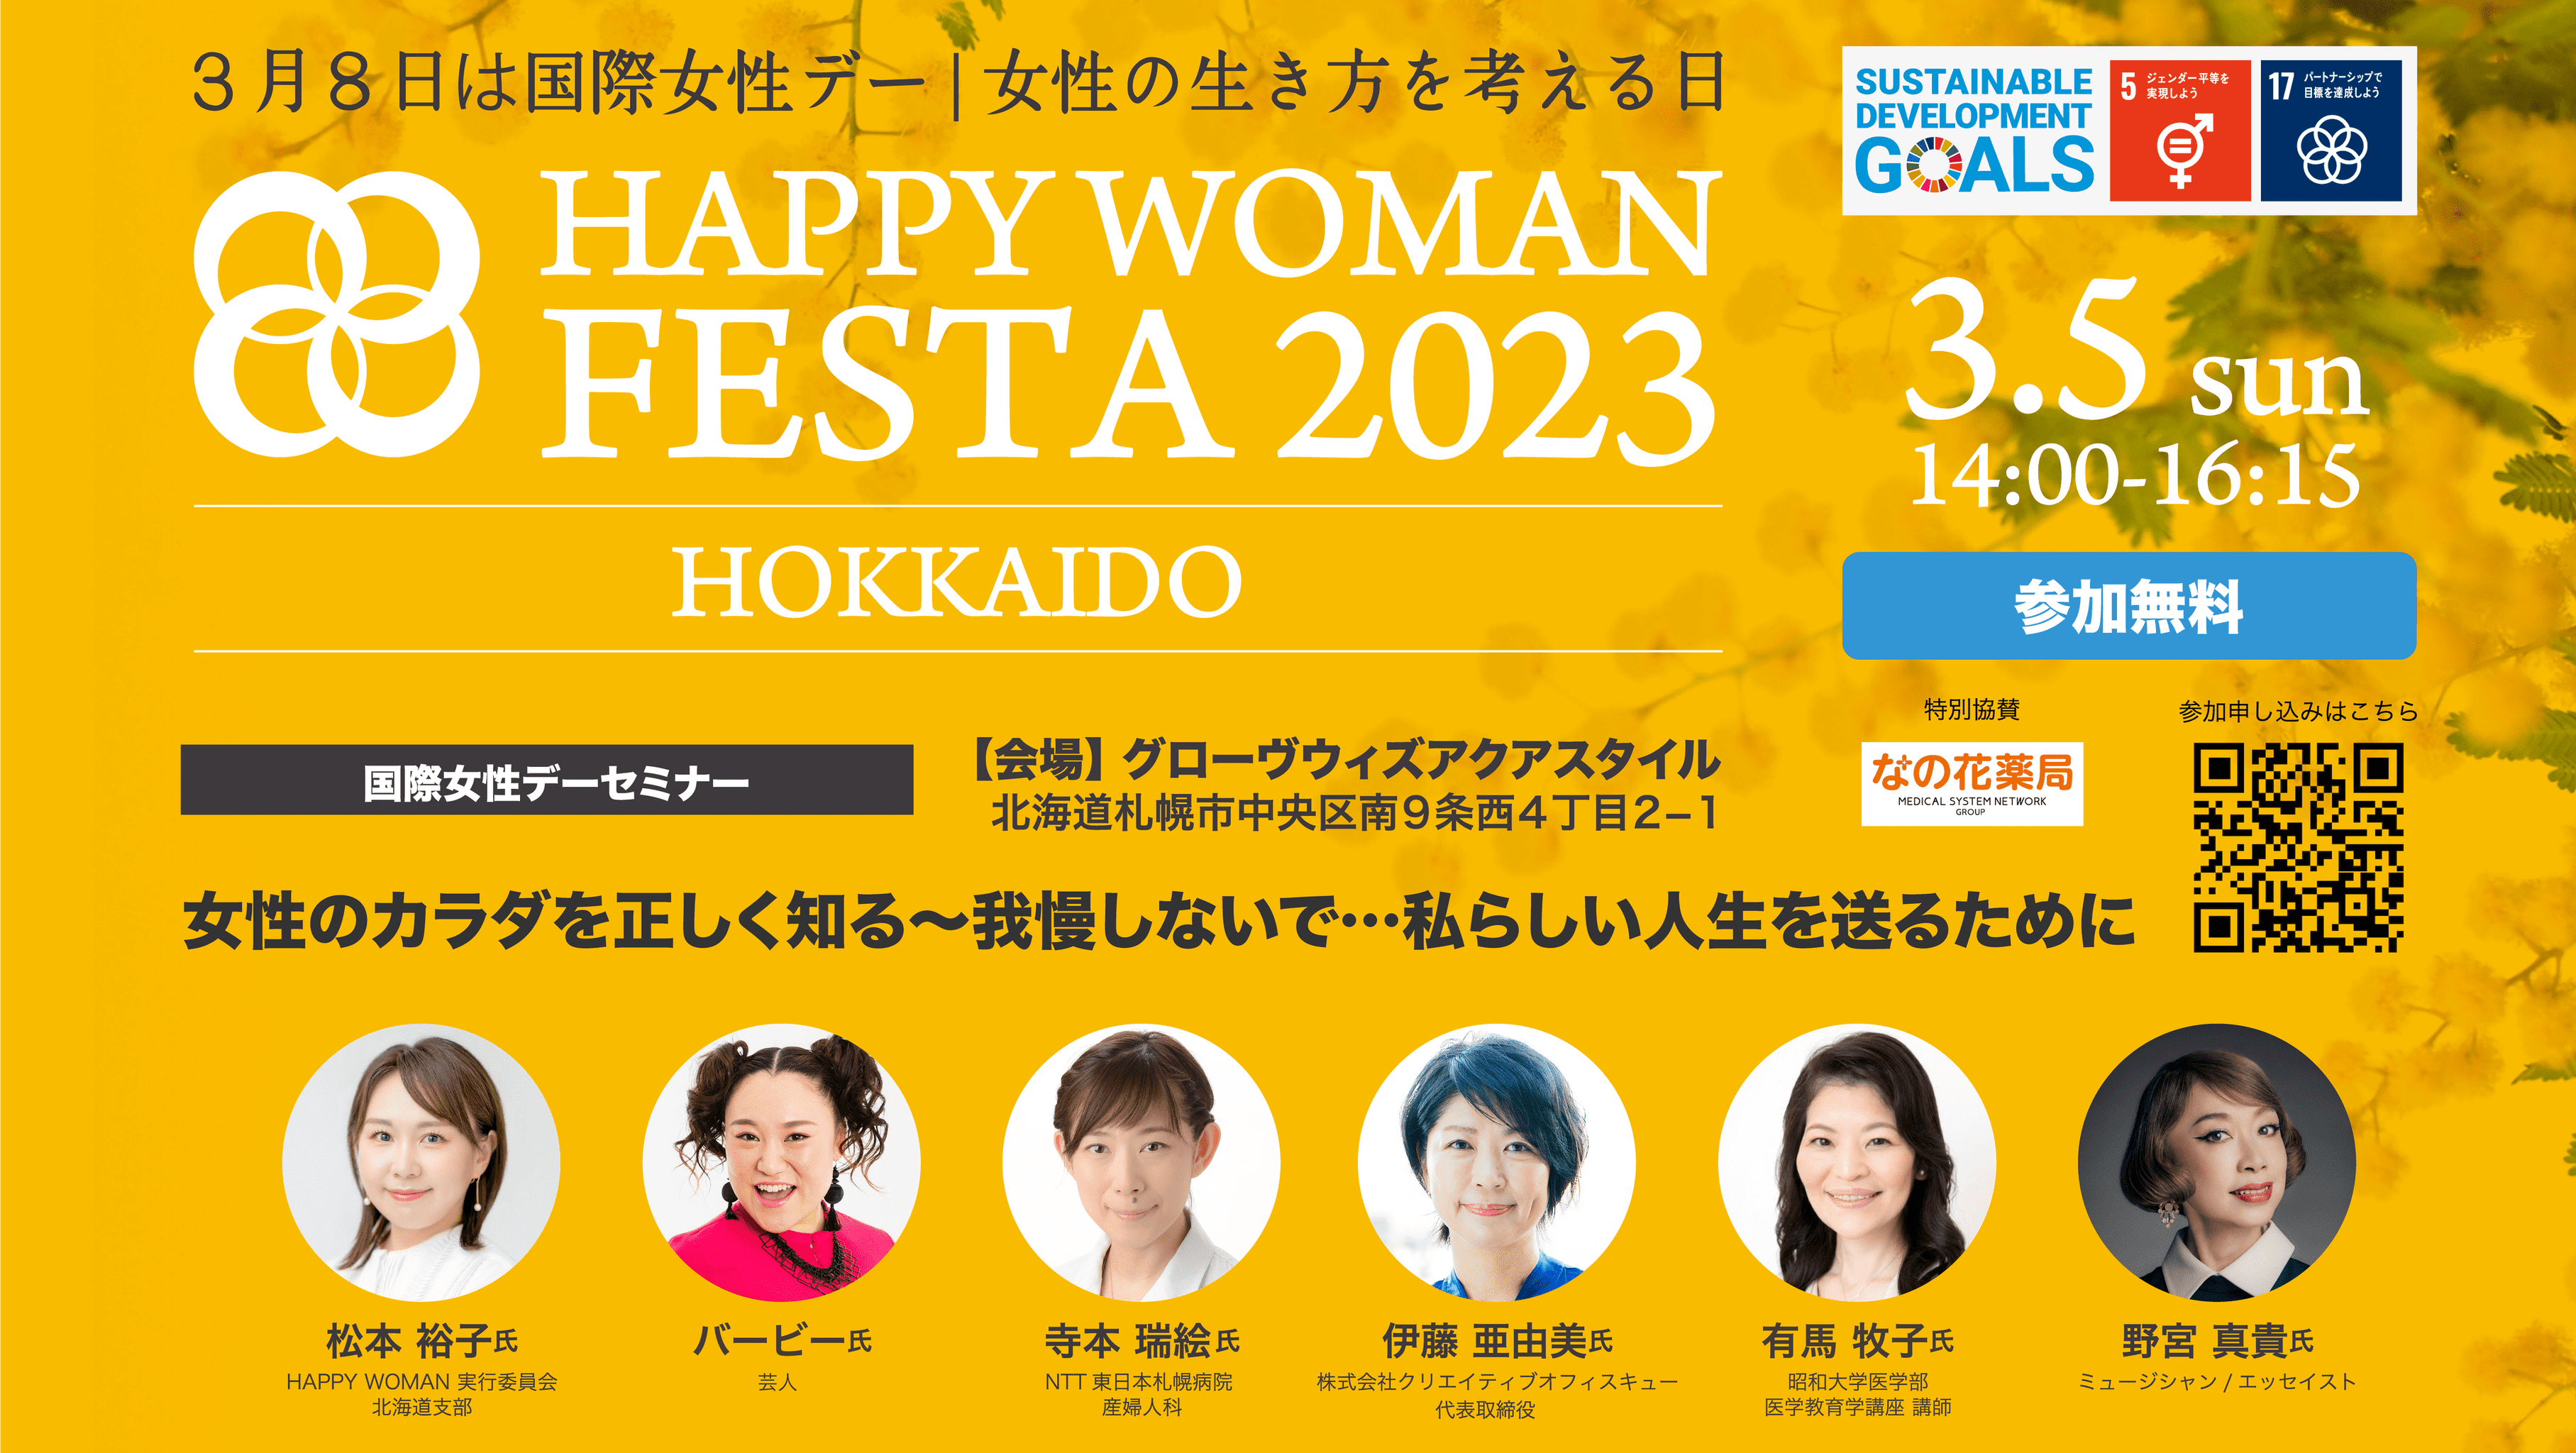 HAPPY WOMAN実行委員会 北海道支部が設立　
3月5日(日)に札幌で
「HAPPY WOMAN FESTA 2023 HOKKAIDO」開催